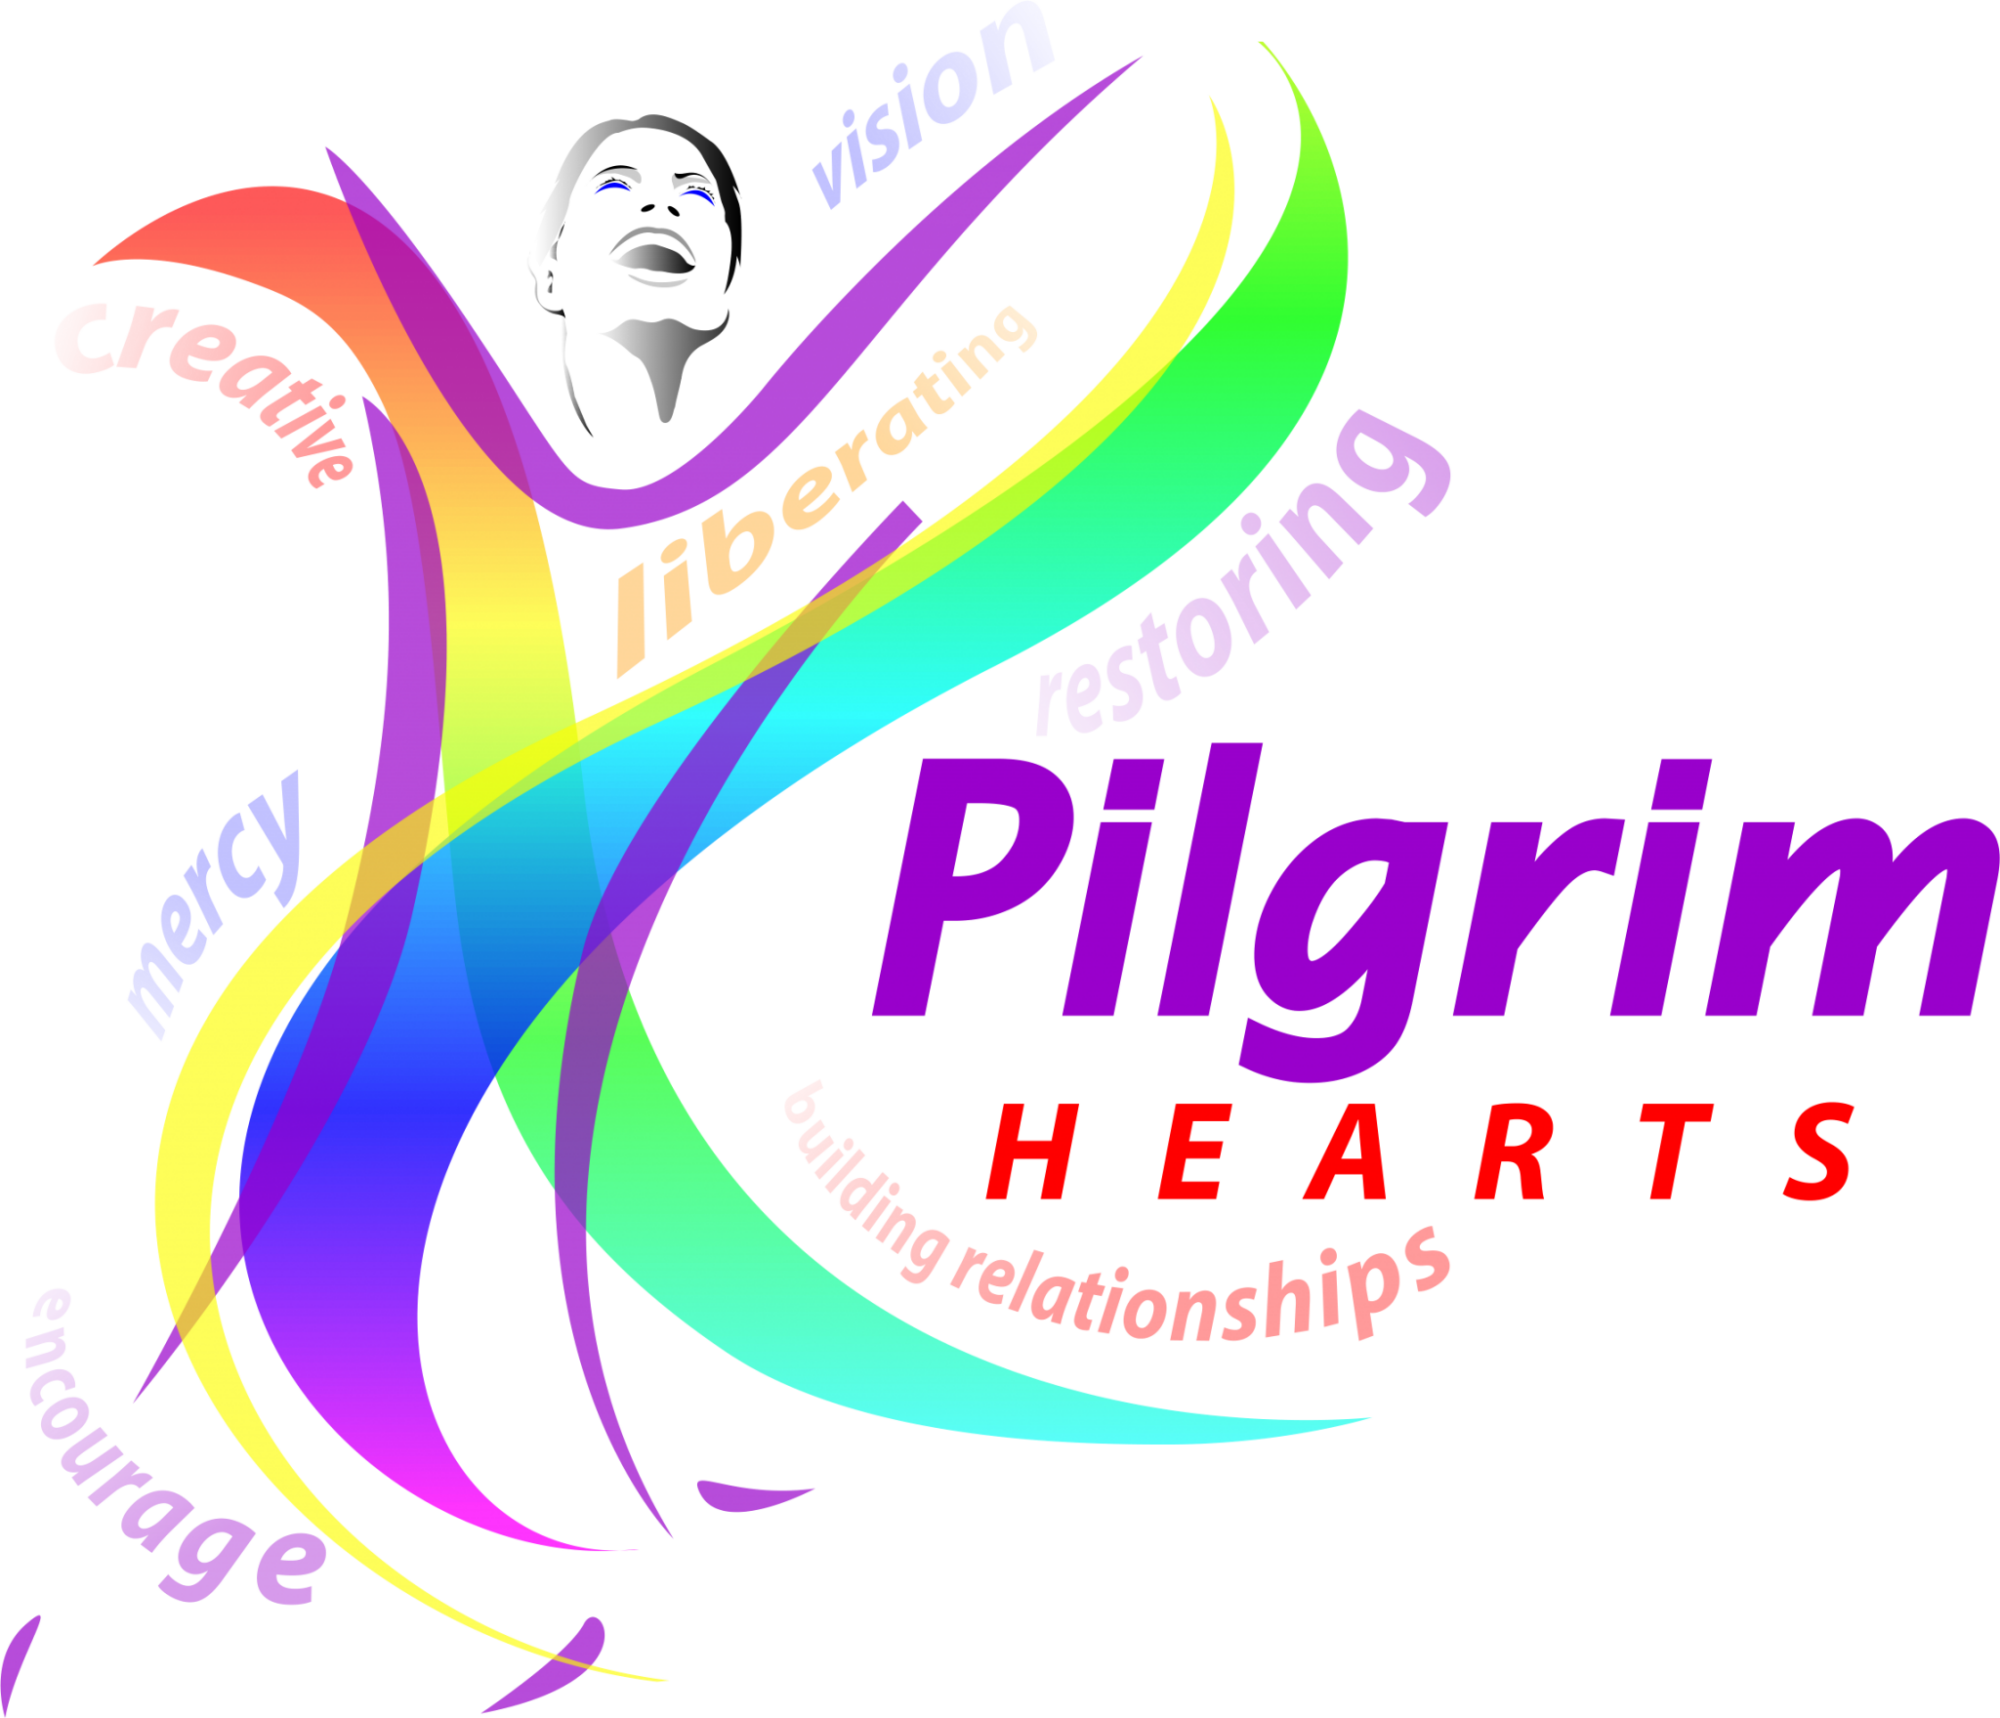 Pilgrim Hearts logo